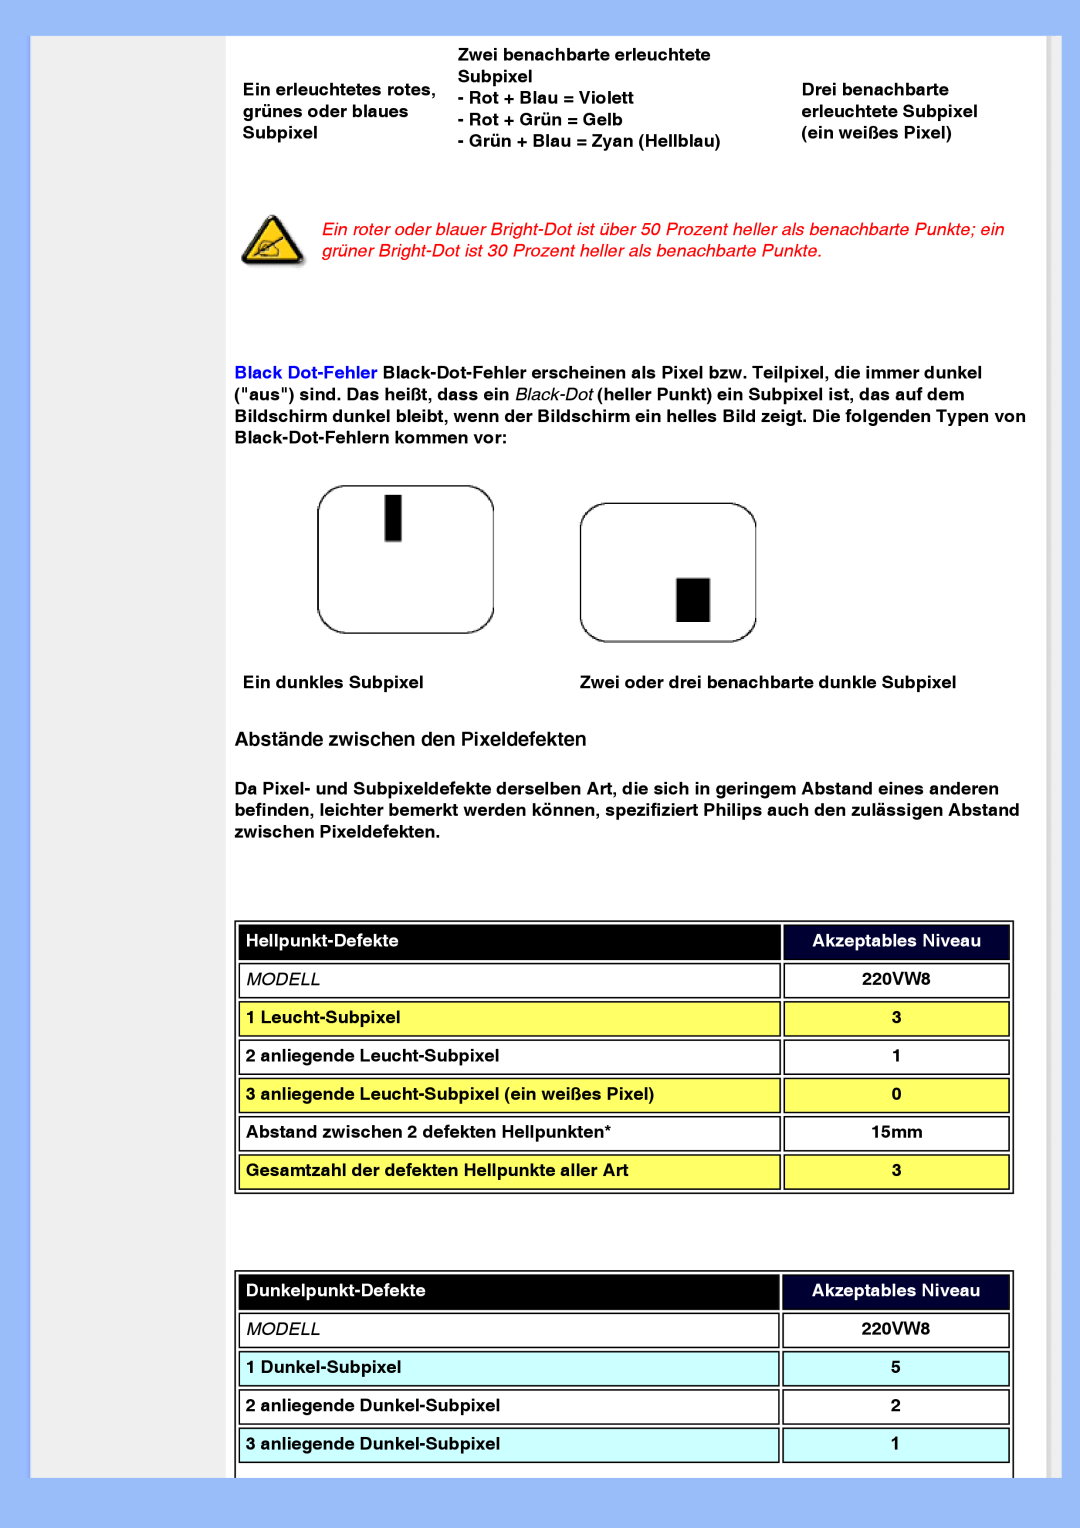 Philips 220VW8 user manual Hellpunkt-Defekte, Akzeptables Niveau, Modell, Dunkelpunkt-Defekte 